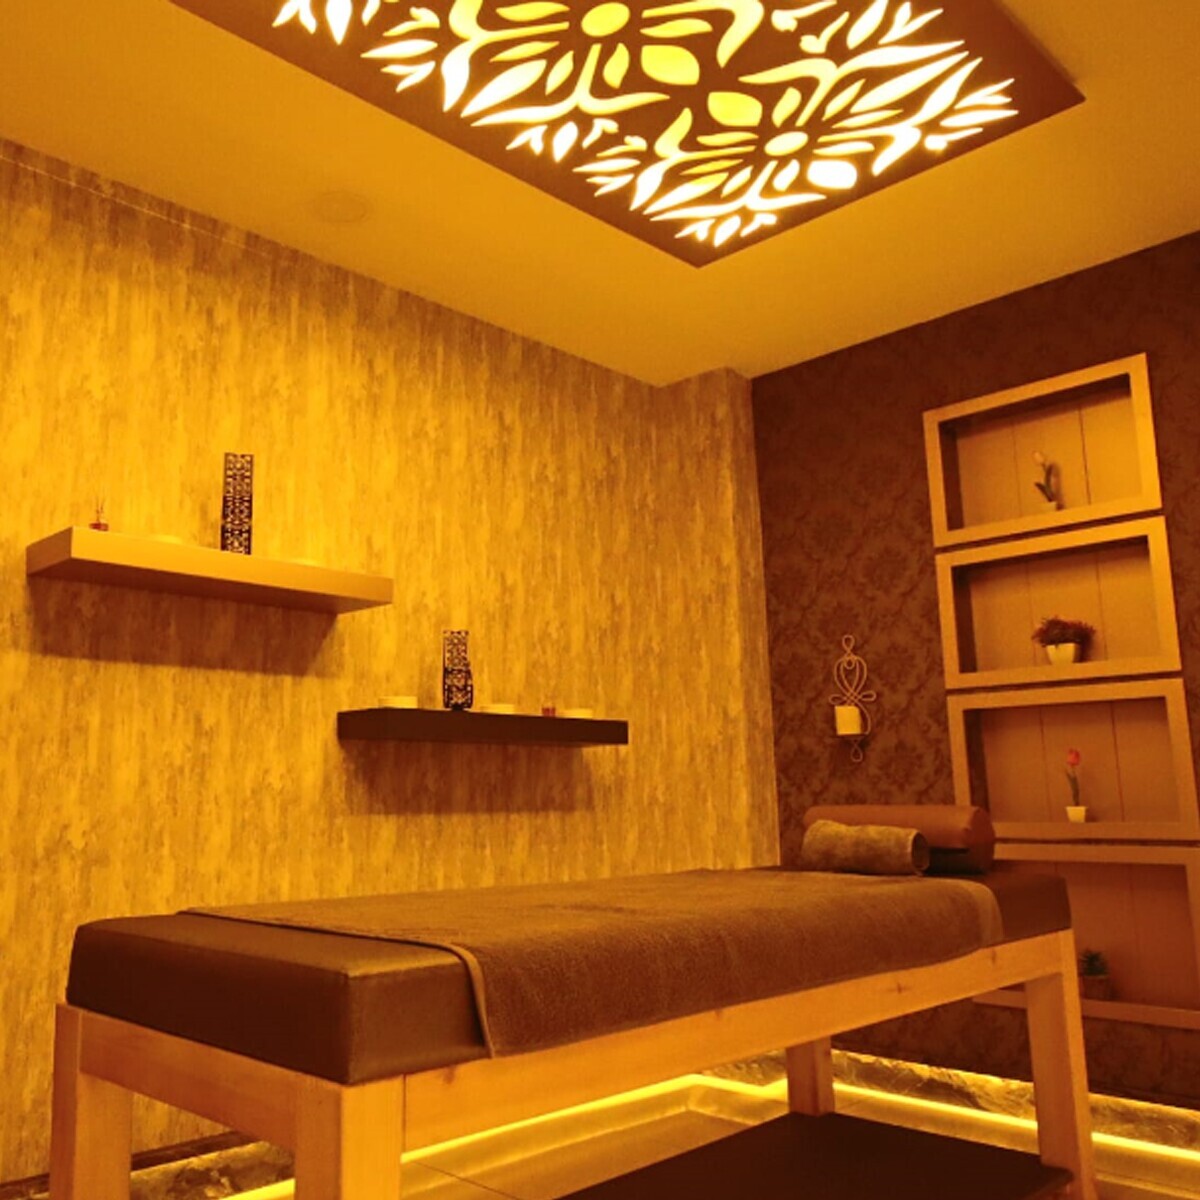 Koza Milenyum Otel New Ares Spa'da Masaj, Kese Köpük & Islak Alan Seçenekleri